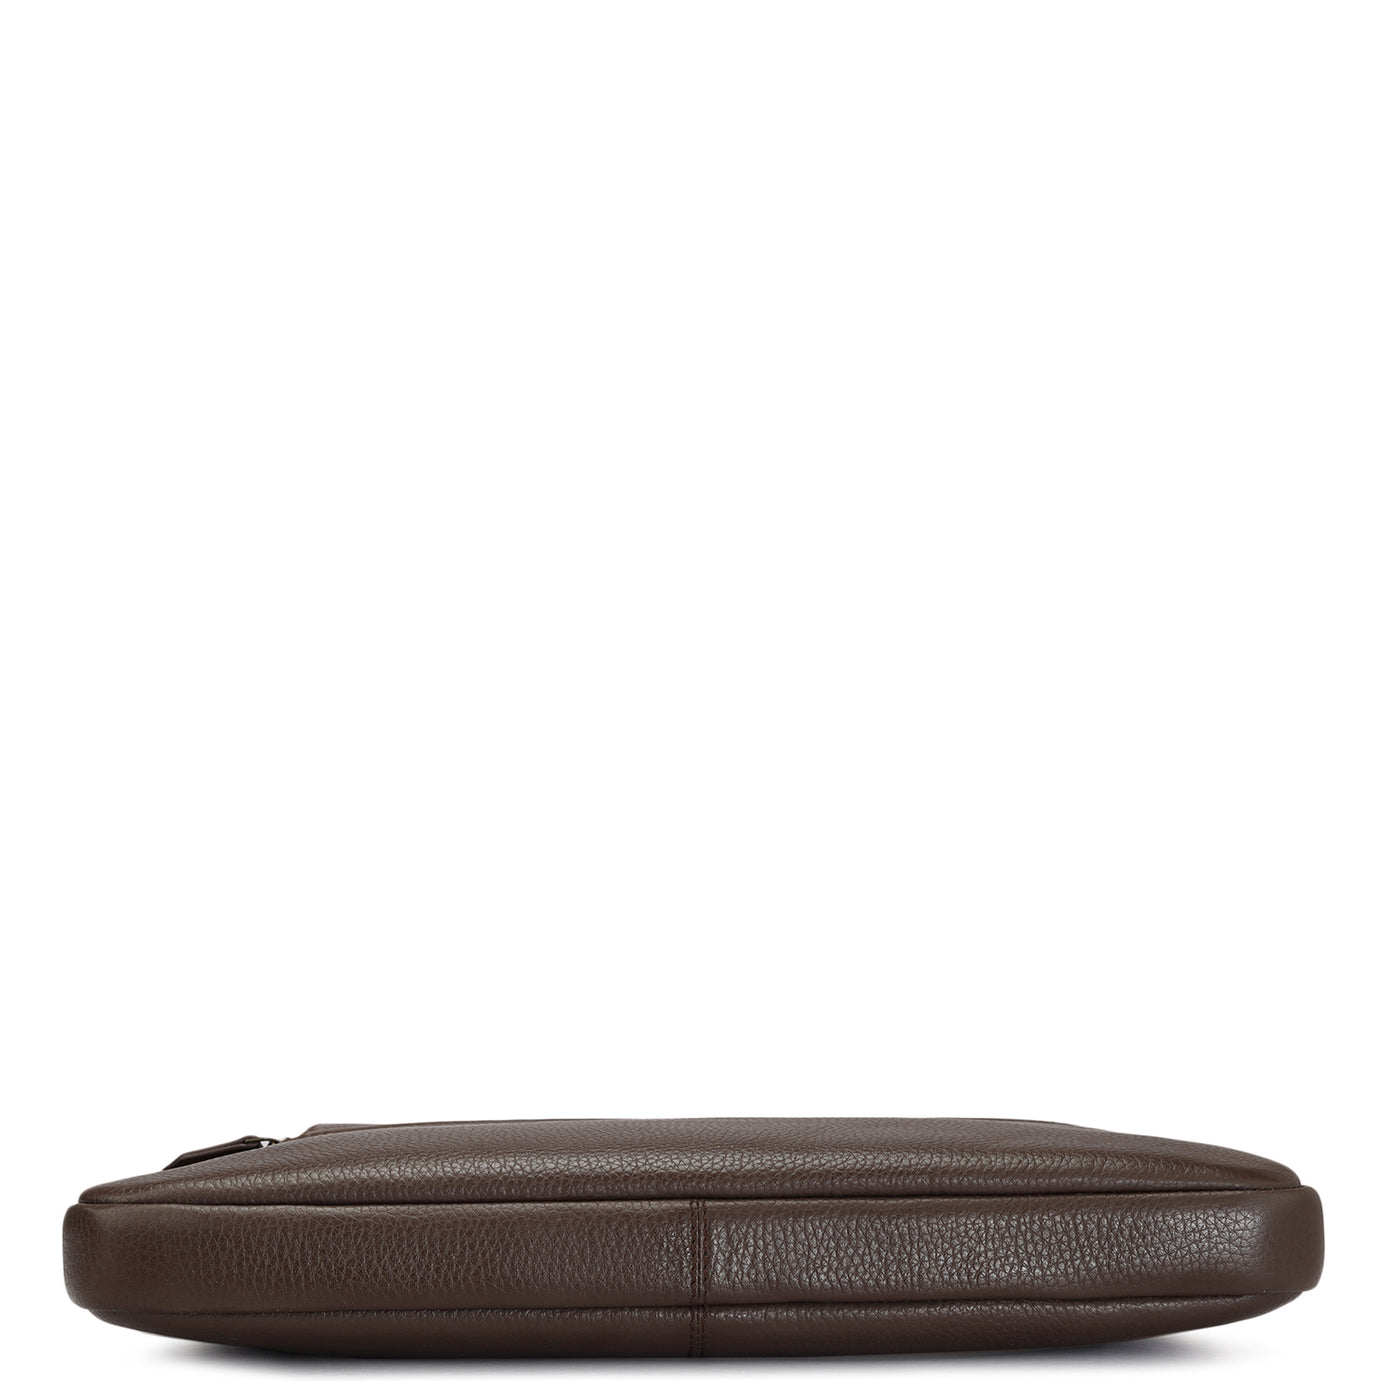 Chocolate Wax Leather Laptop Sleeve - Upto 15"